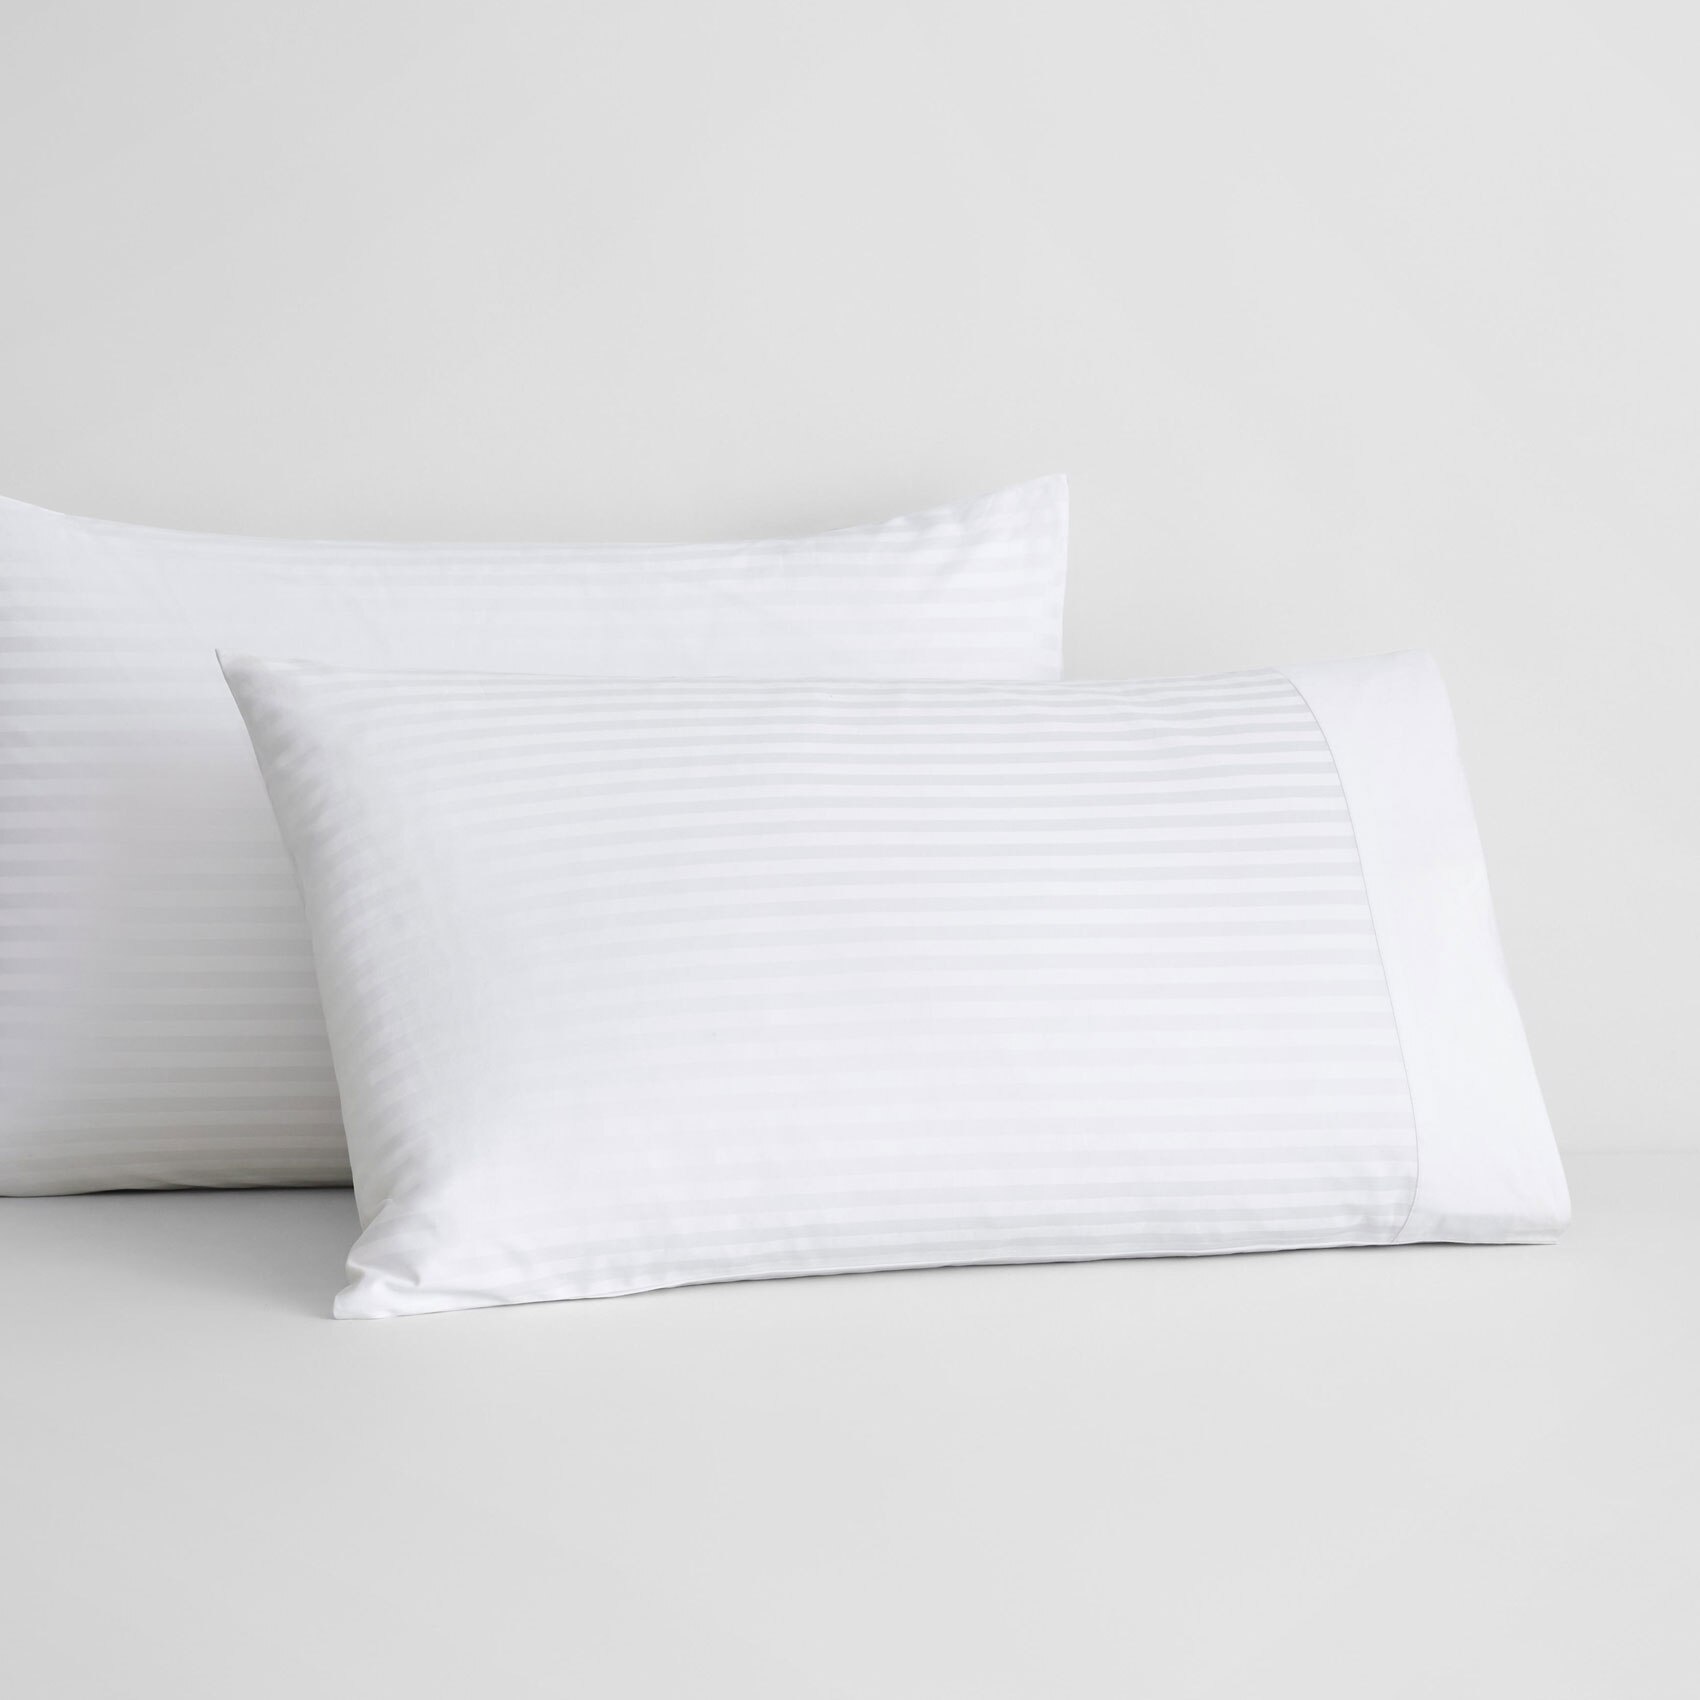 Sheridan 1200TC Millennia Pillowcase Pair in Size: Standard @Sheridan Rewards